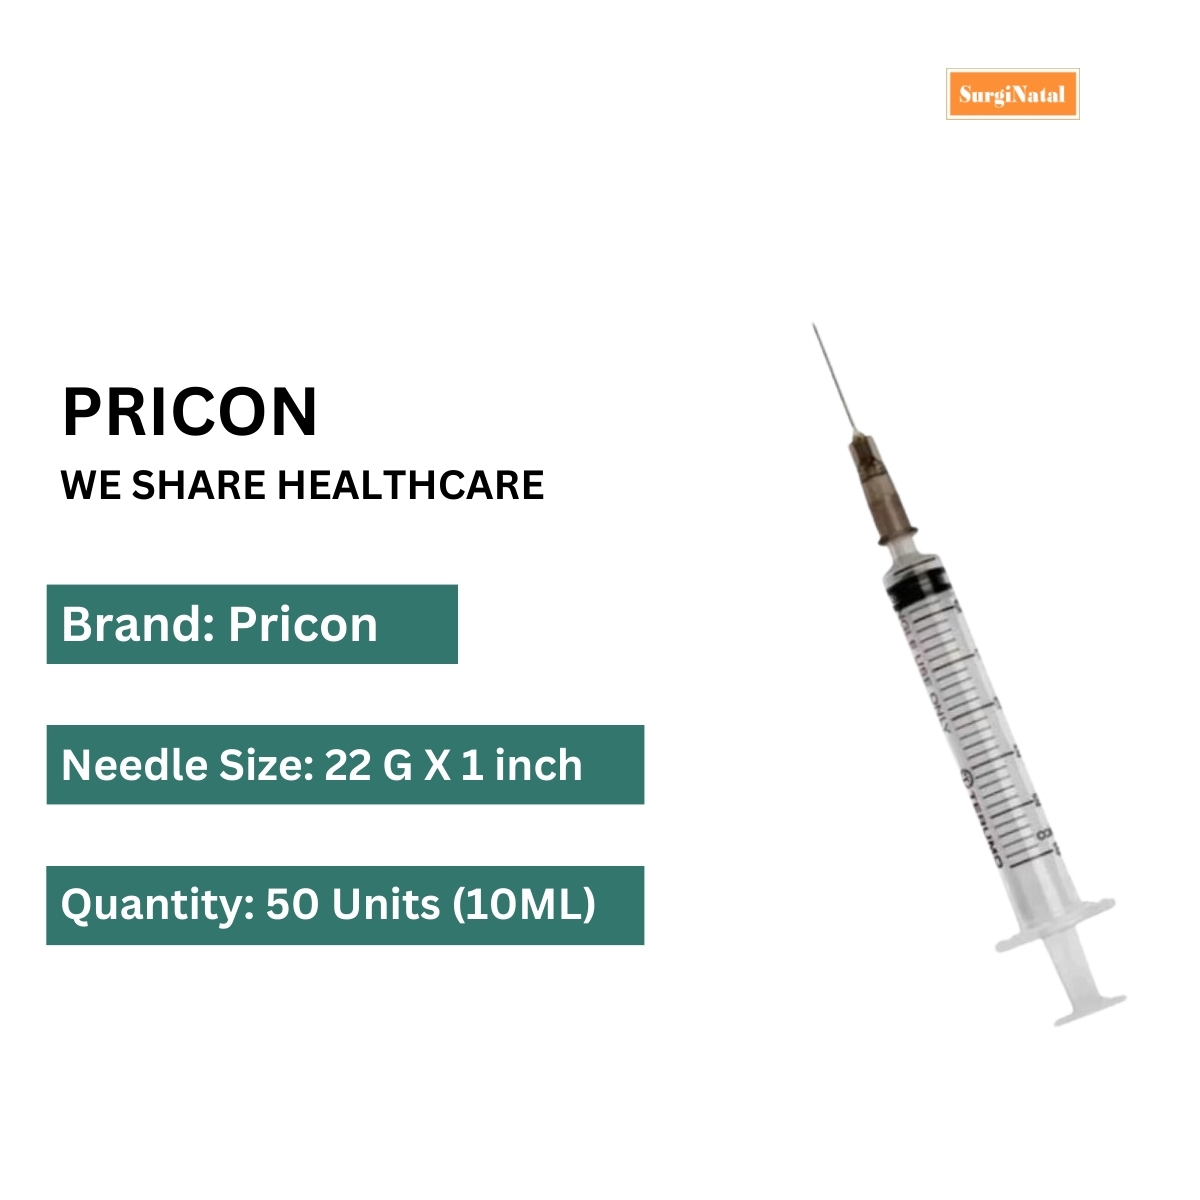 pricon 10ml syringe with needle - 50 units pack